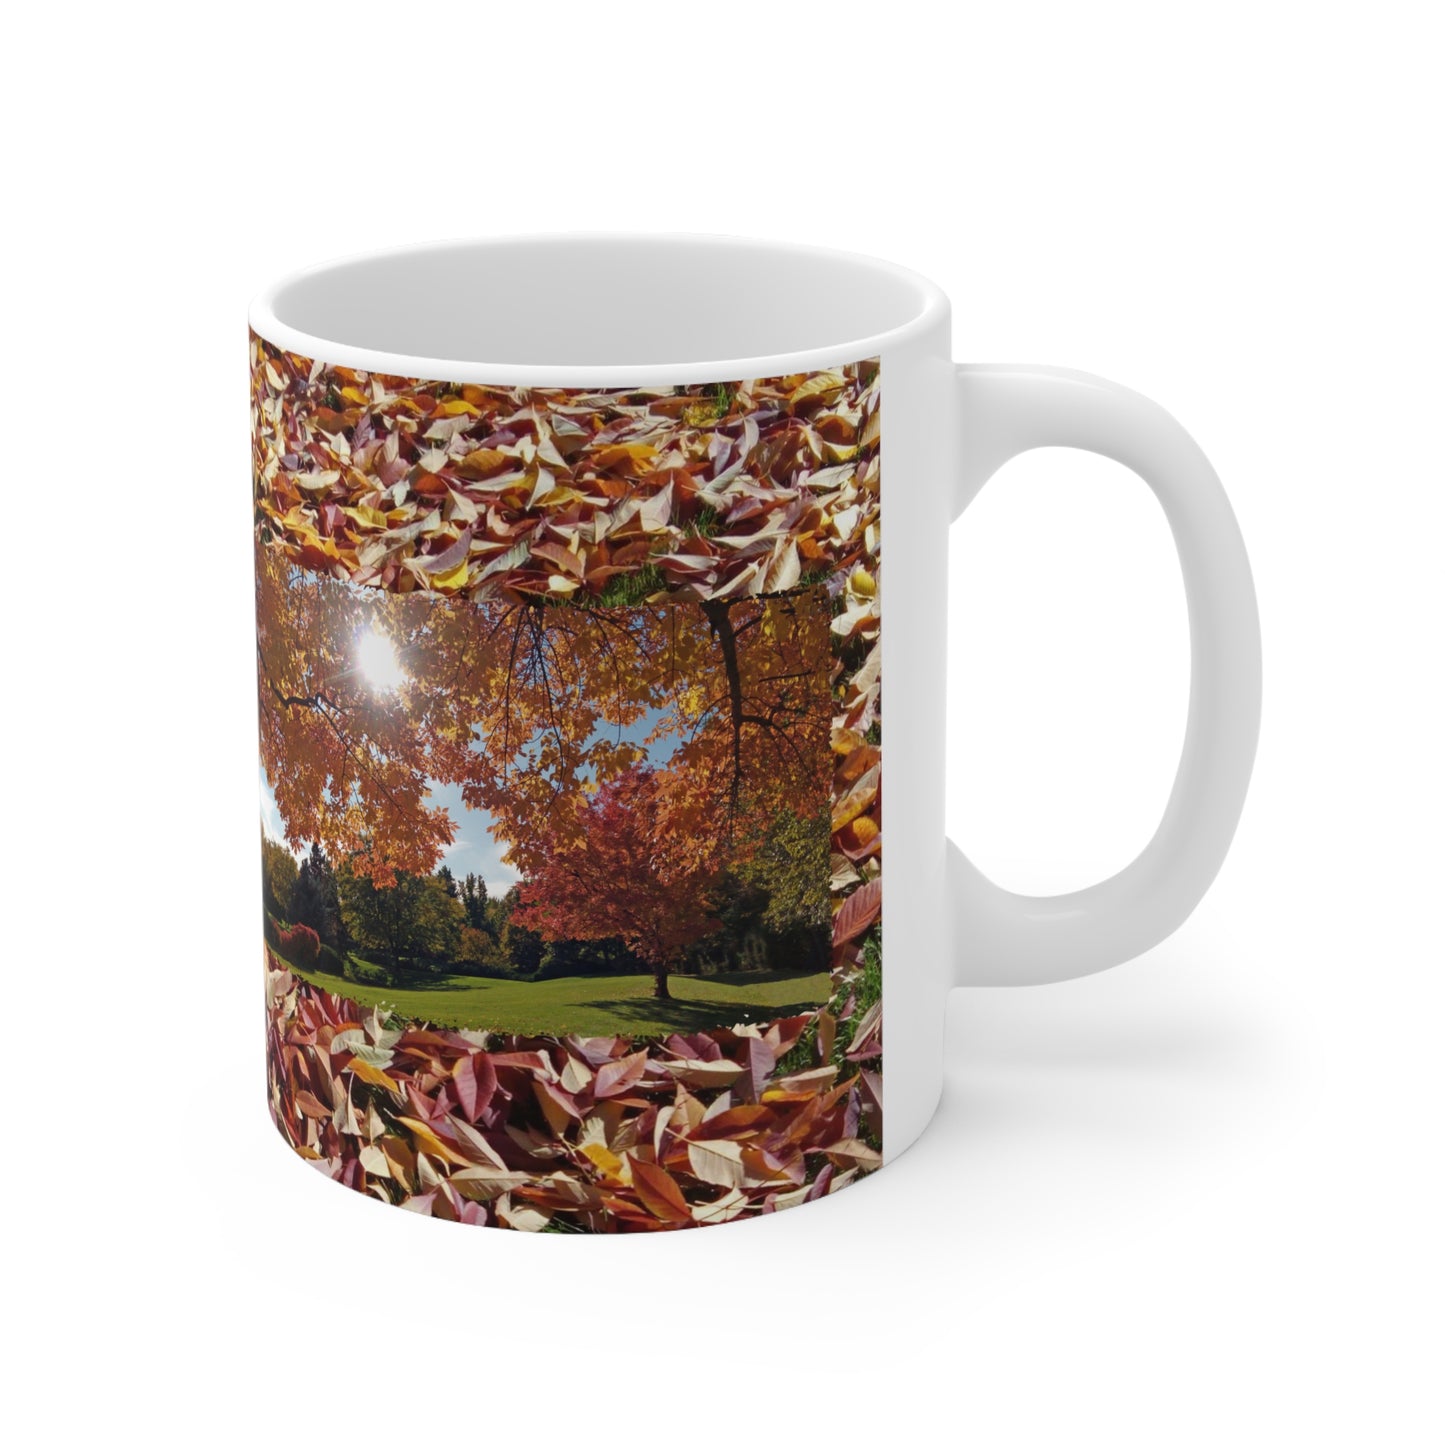 Autumn Light with Leaf background Ceramic Mug 11oz